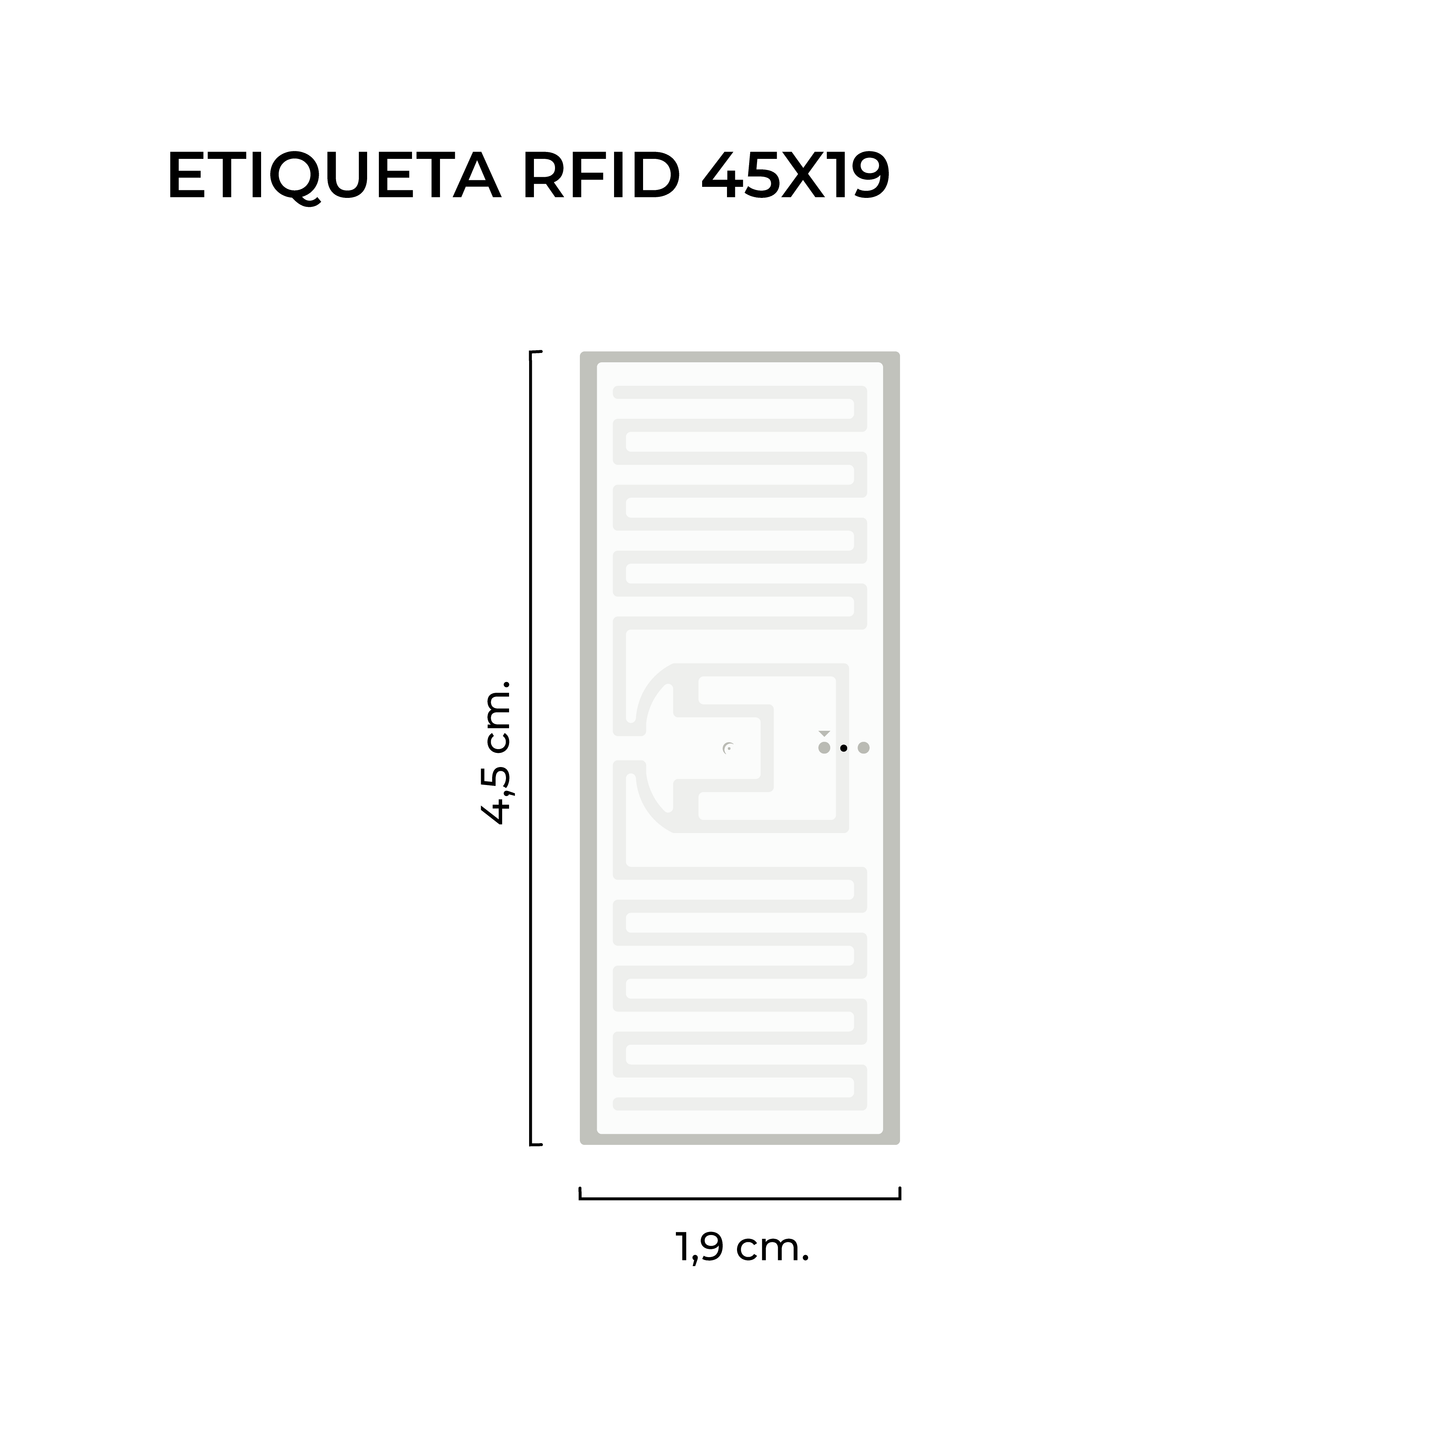 Rollo de Etiquetas RFID 45mmx19mm (5.000 unds x rollo)